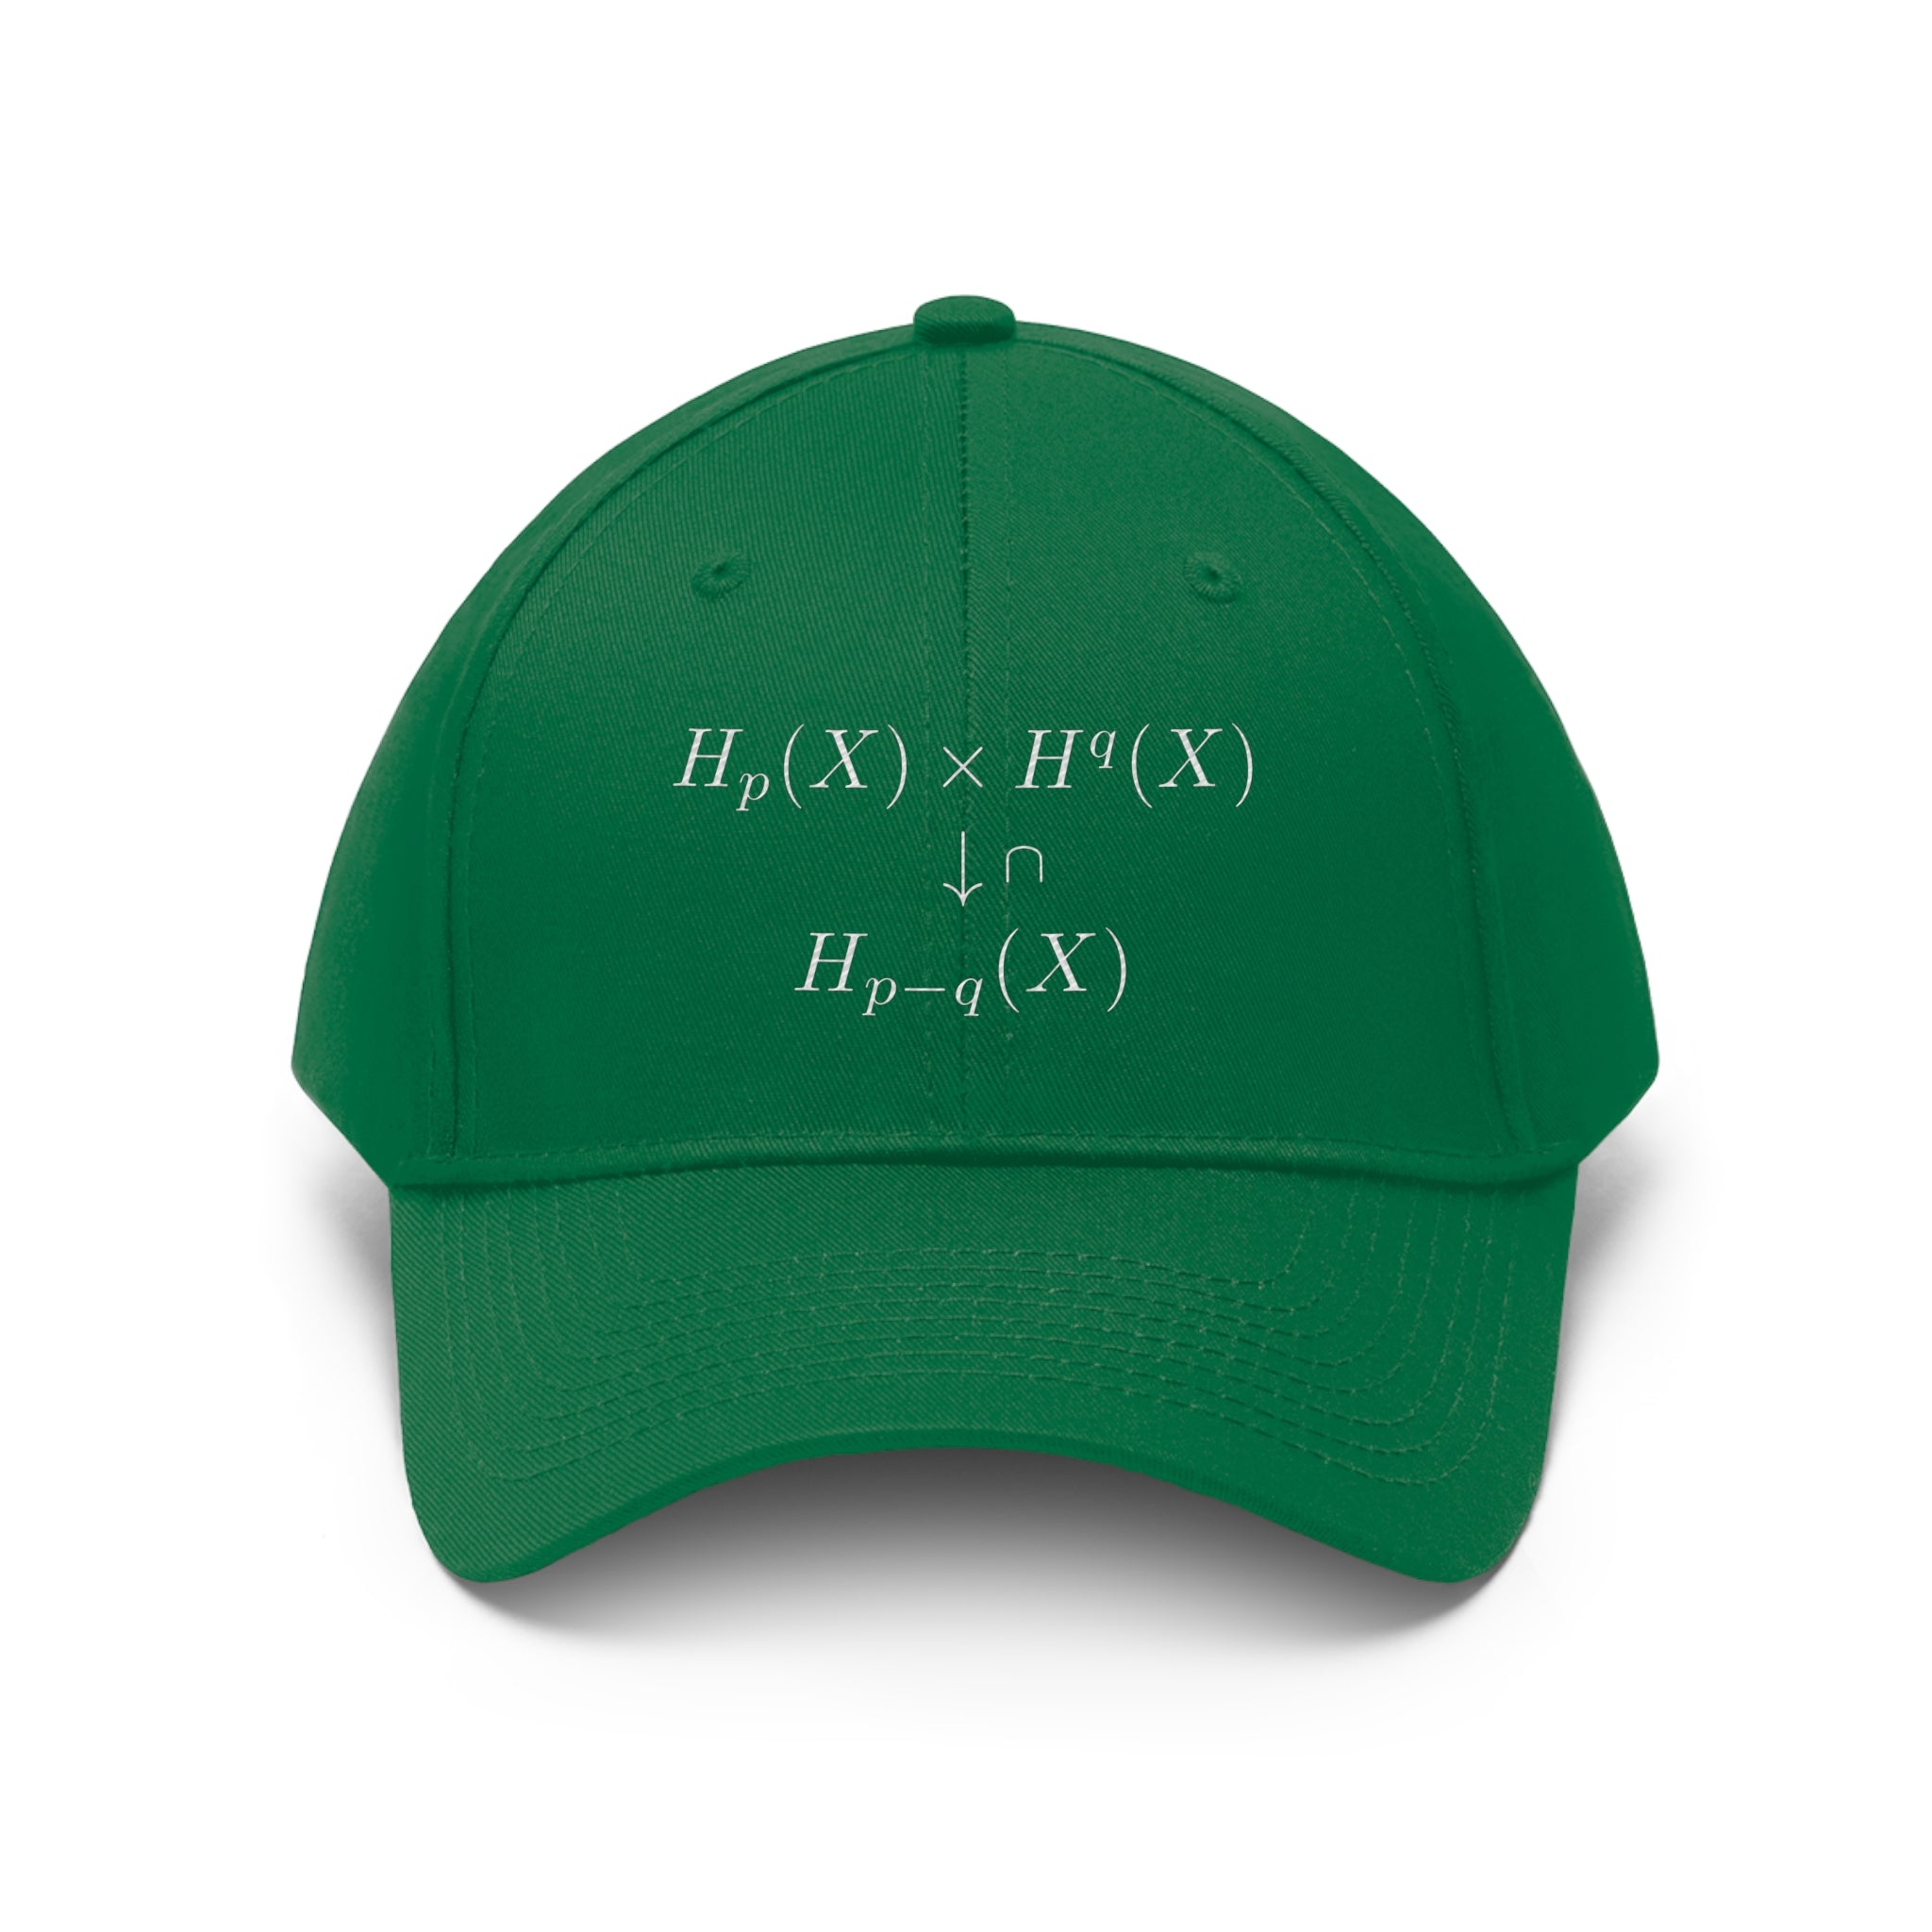 Cap product hat – The Ross Math Program